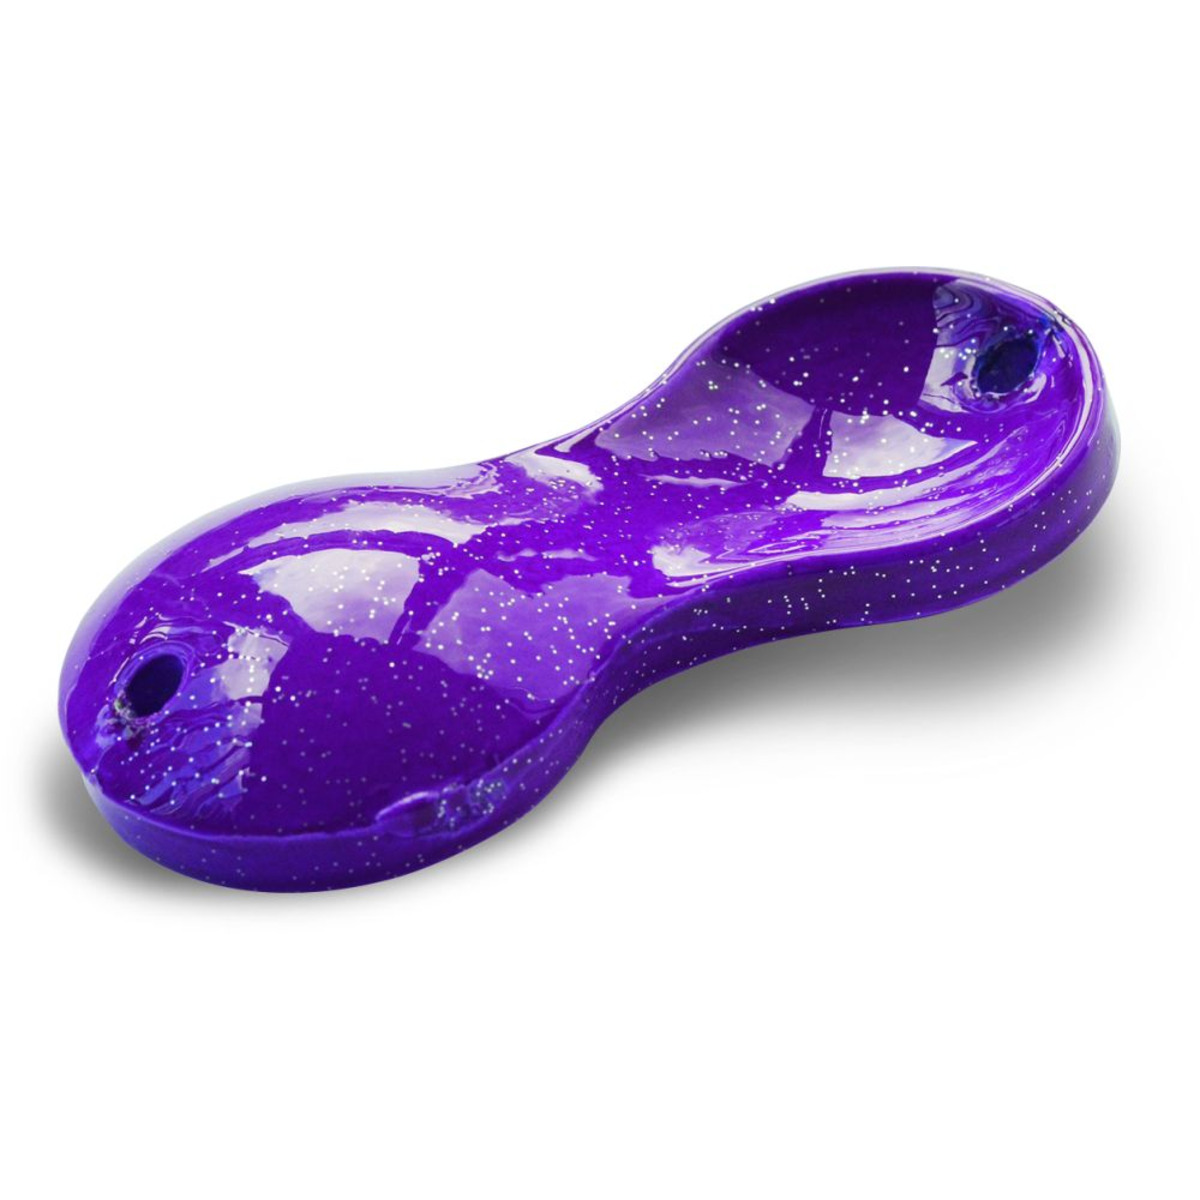 Zebco Z-sea Flatty Teaser, Lead Free - 80 g - purple/rainbow glitter